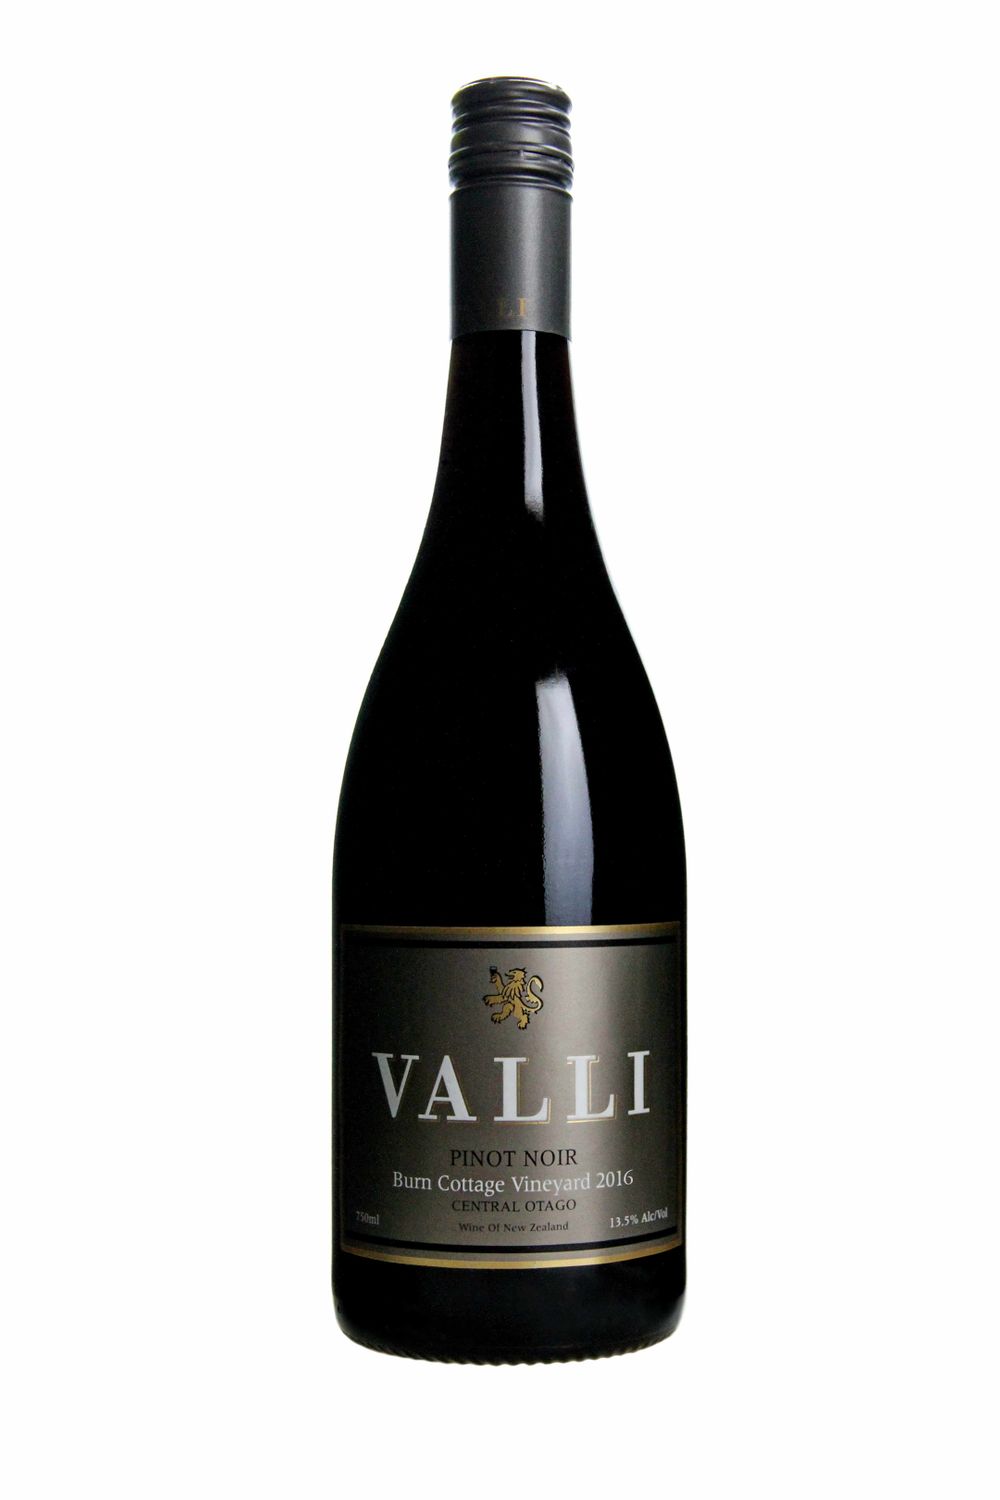 Valli Burn Cottage Vineyard Pinot Noir